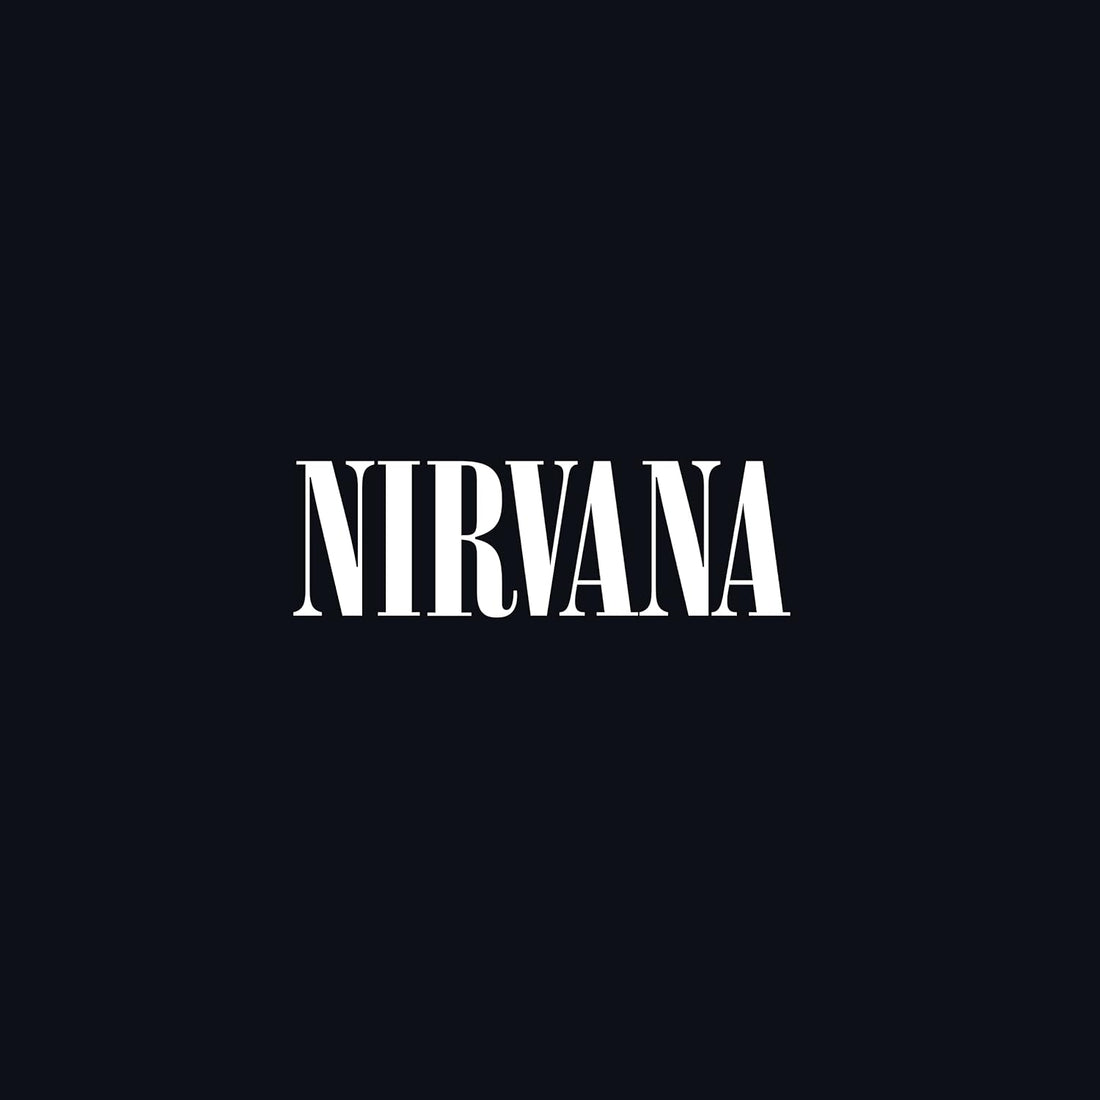 Nirvana | Nirvana - Vinyl.ae